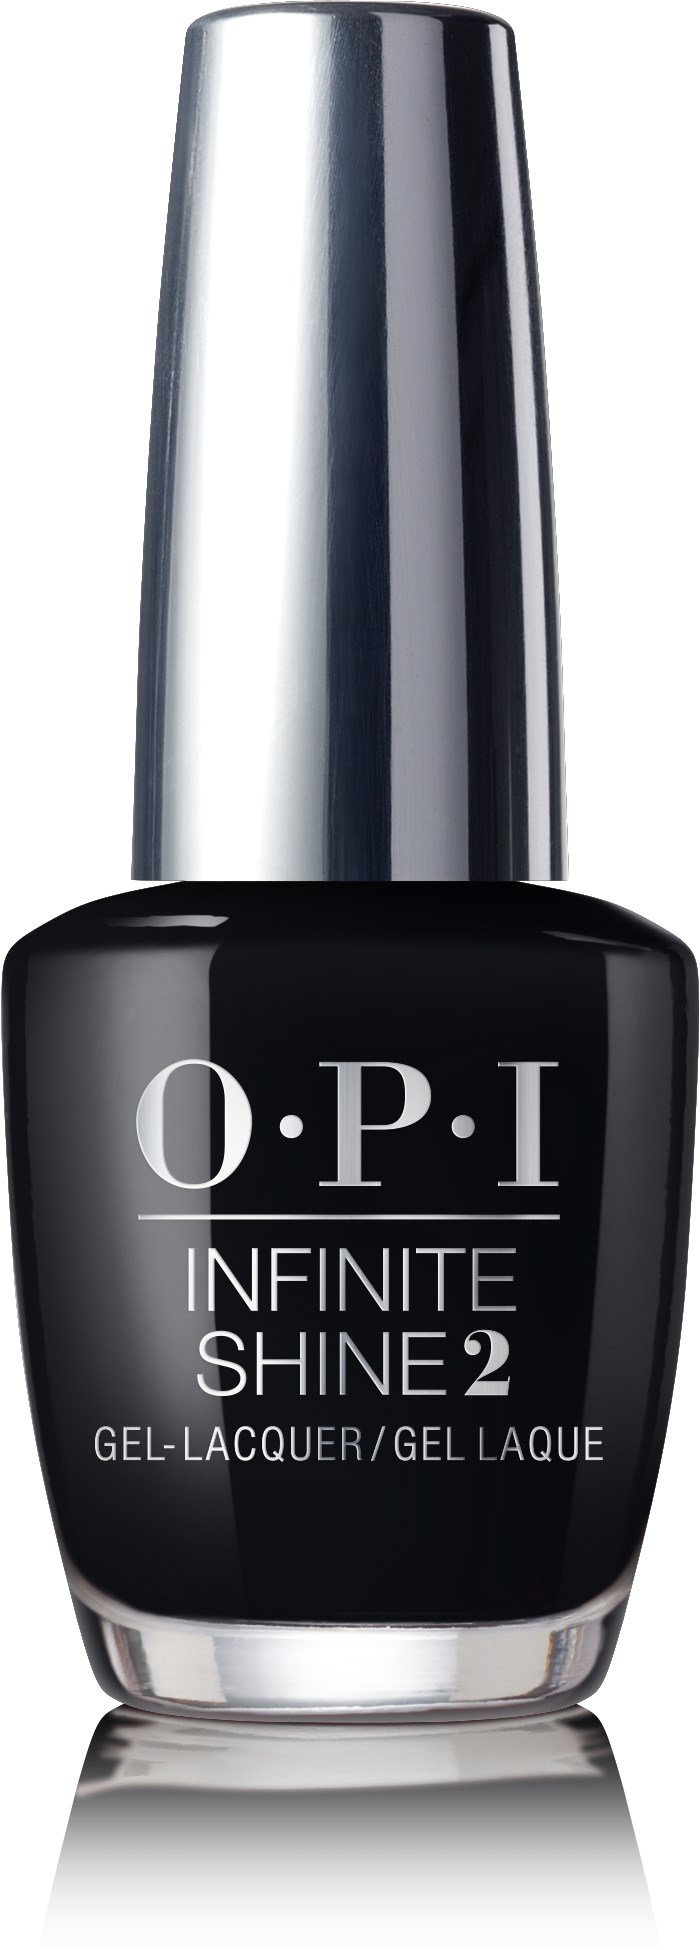 OPI Infinite Shine - Ónix negro